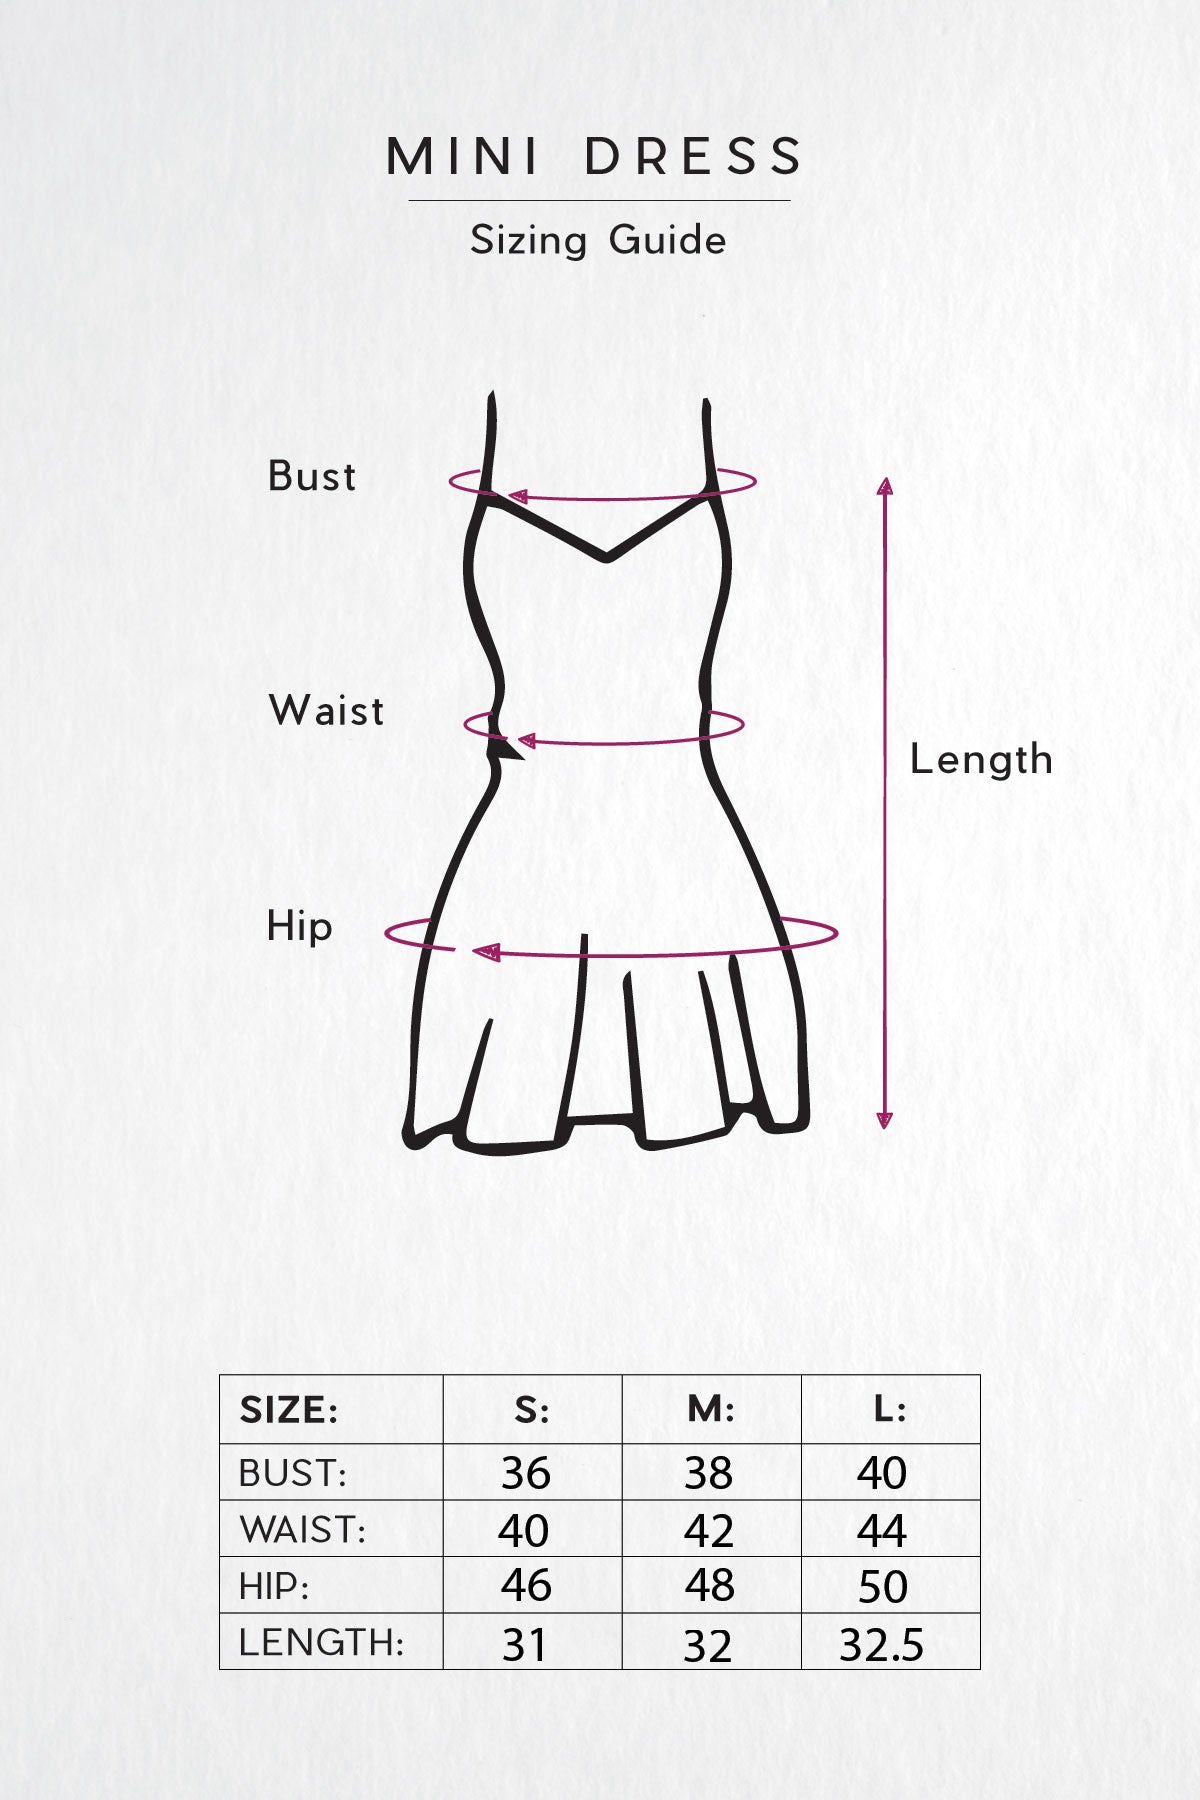 Women's Mini Dress Sizing Guide